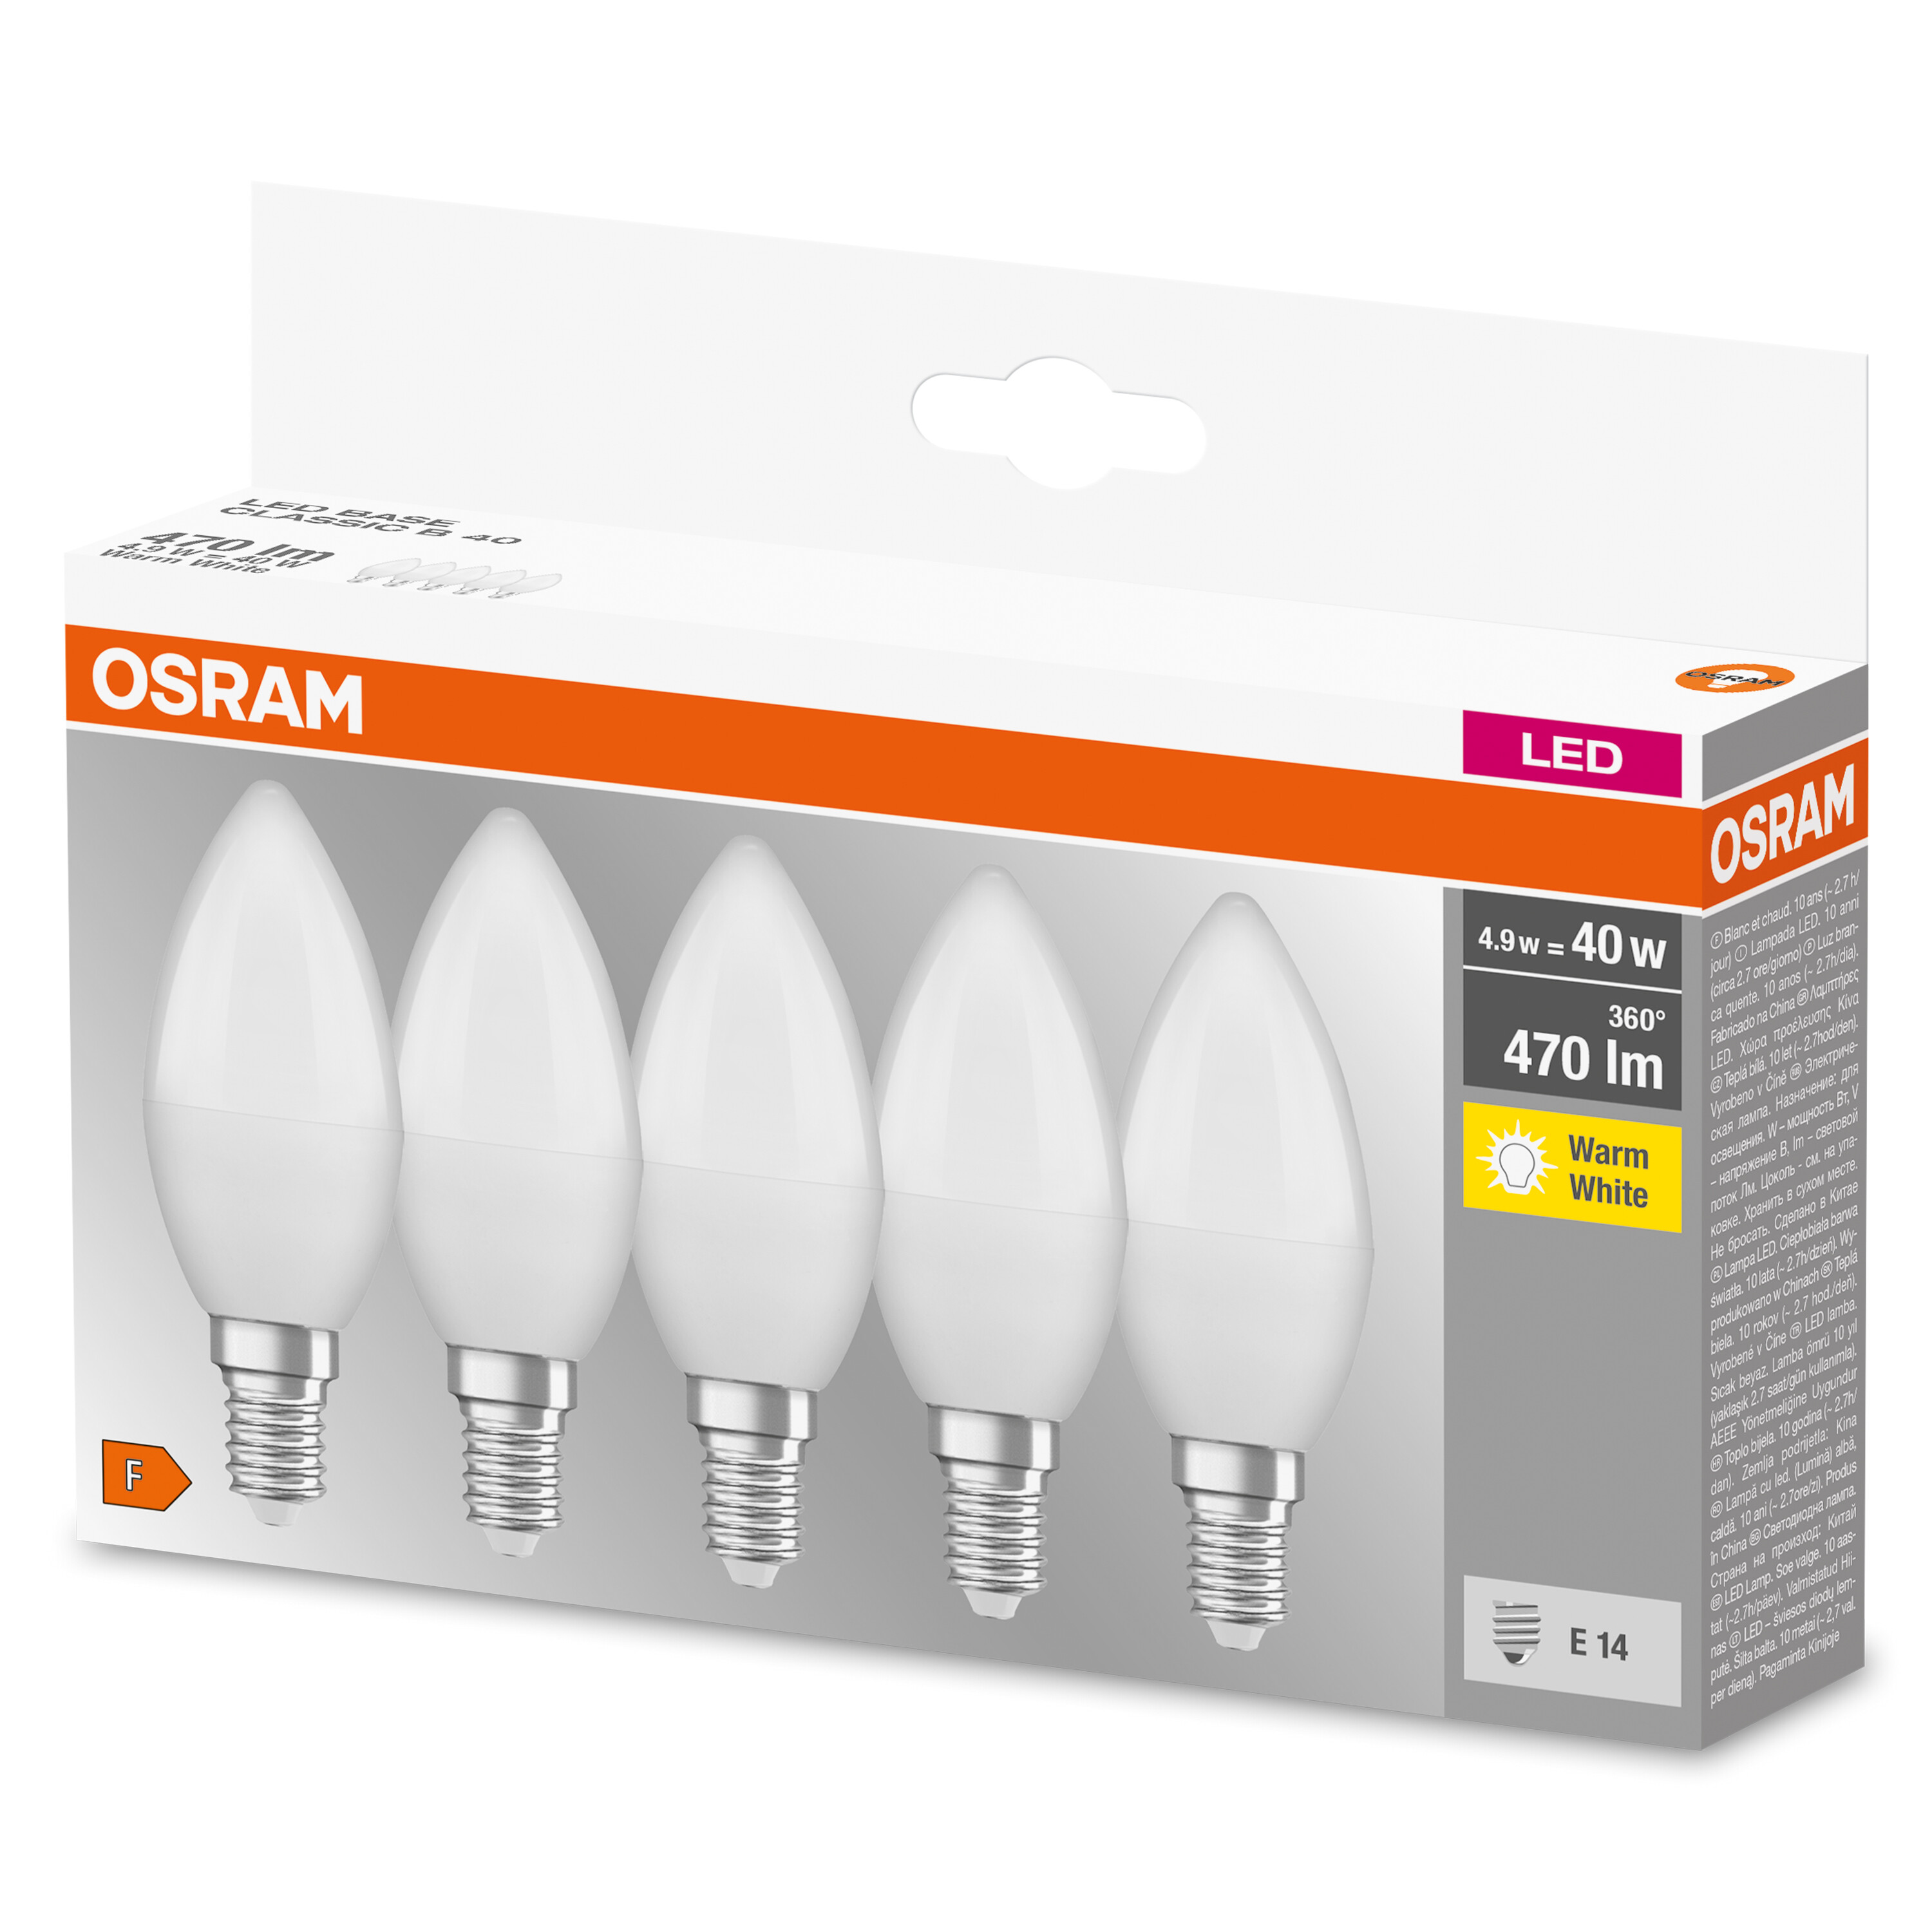 BASE lumen LED B CLASSIC OSRAM  Lampe 470 Warmweiß LED